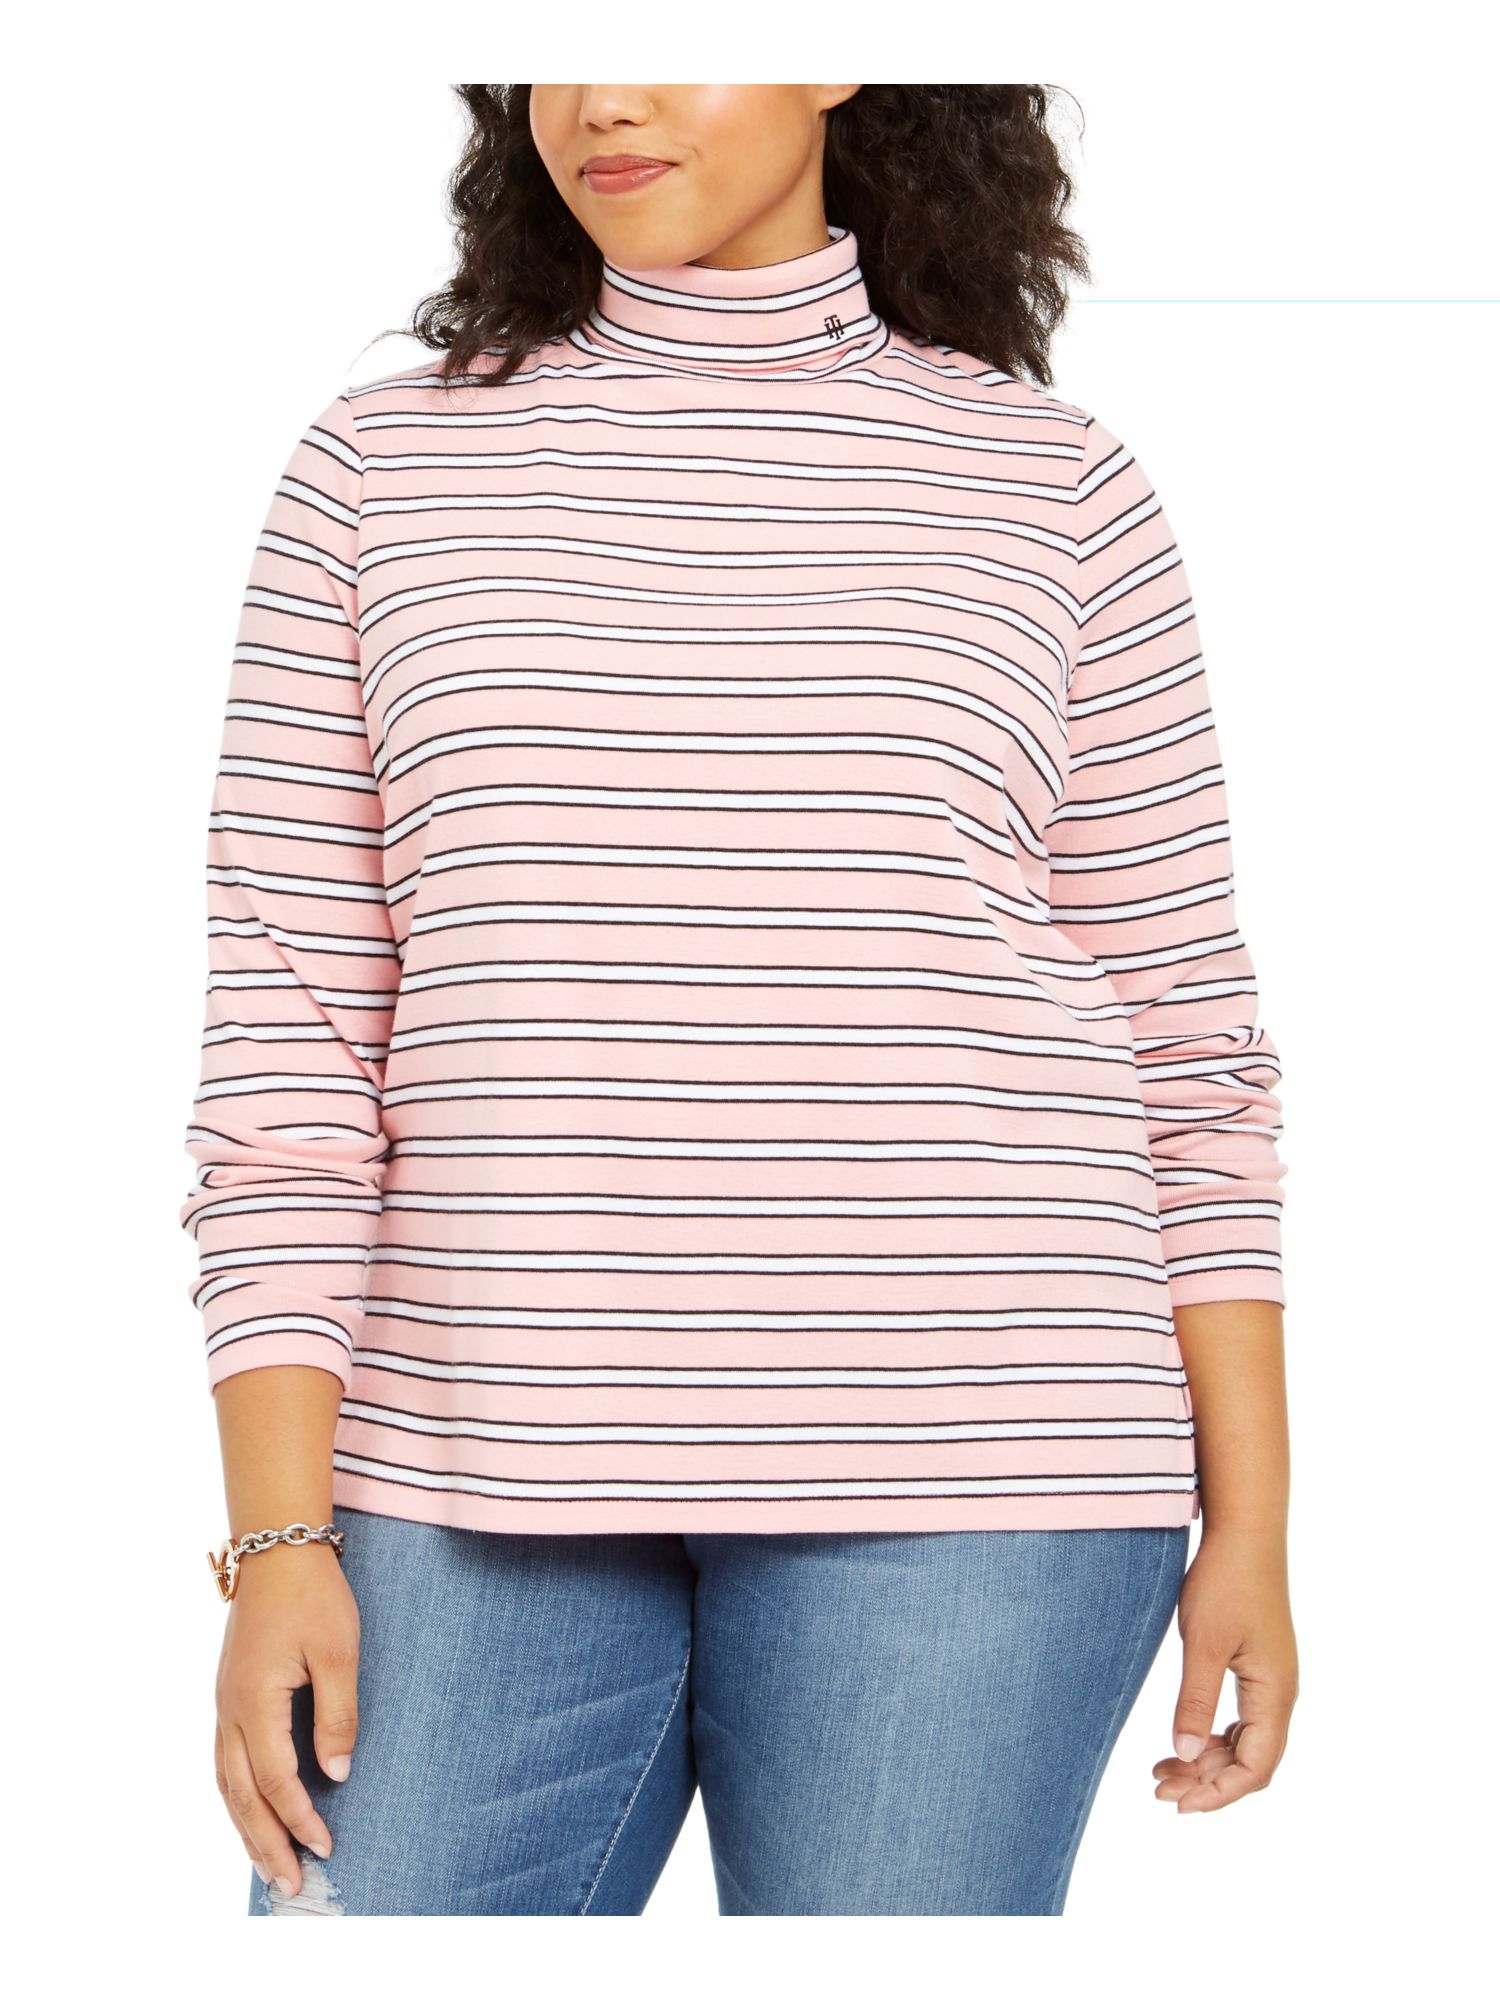 Tommy Hilfiger Women's Plus Striped Turtleneck Top Pink Size 1X